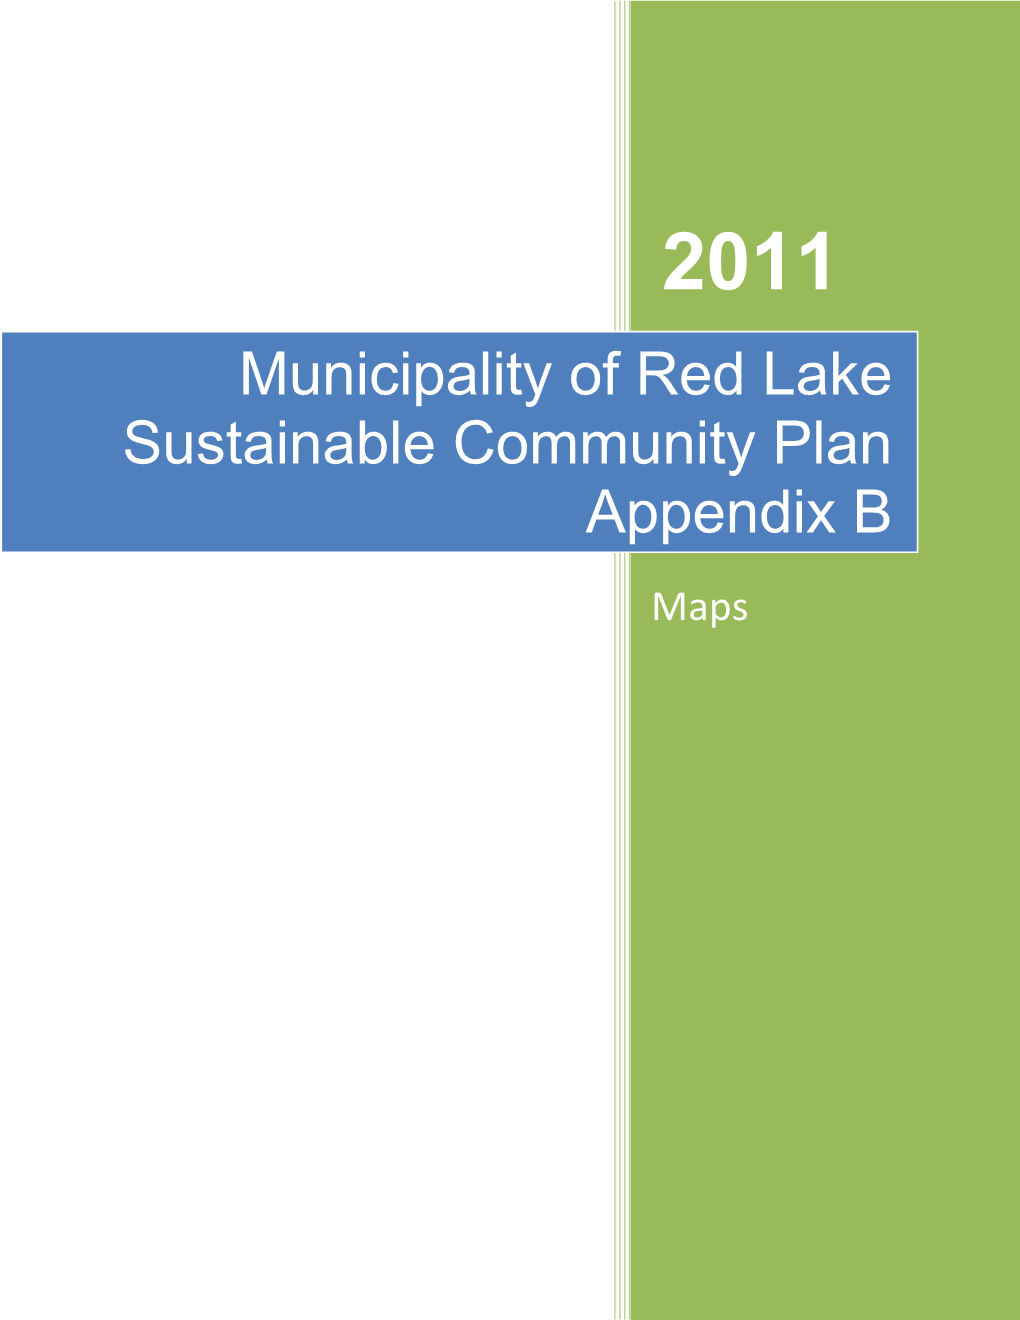 Municipality of Red Lake Sustainable Community Plan Appendix B Maps Municipality of Red Lake Sustainable Community Plan Appendix B - Maps 1